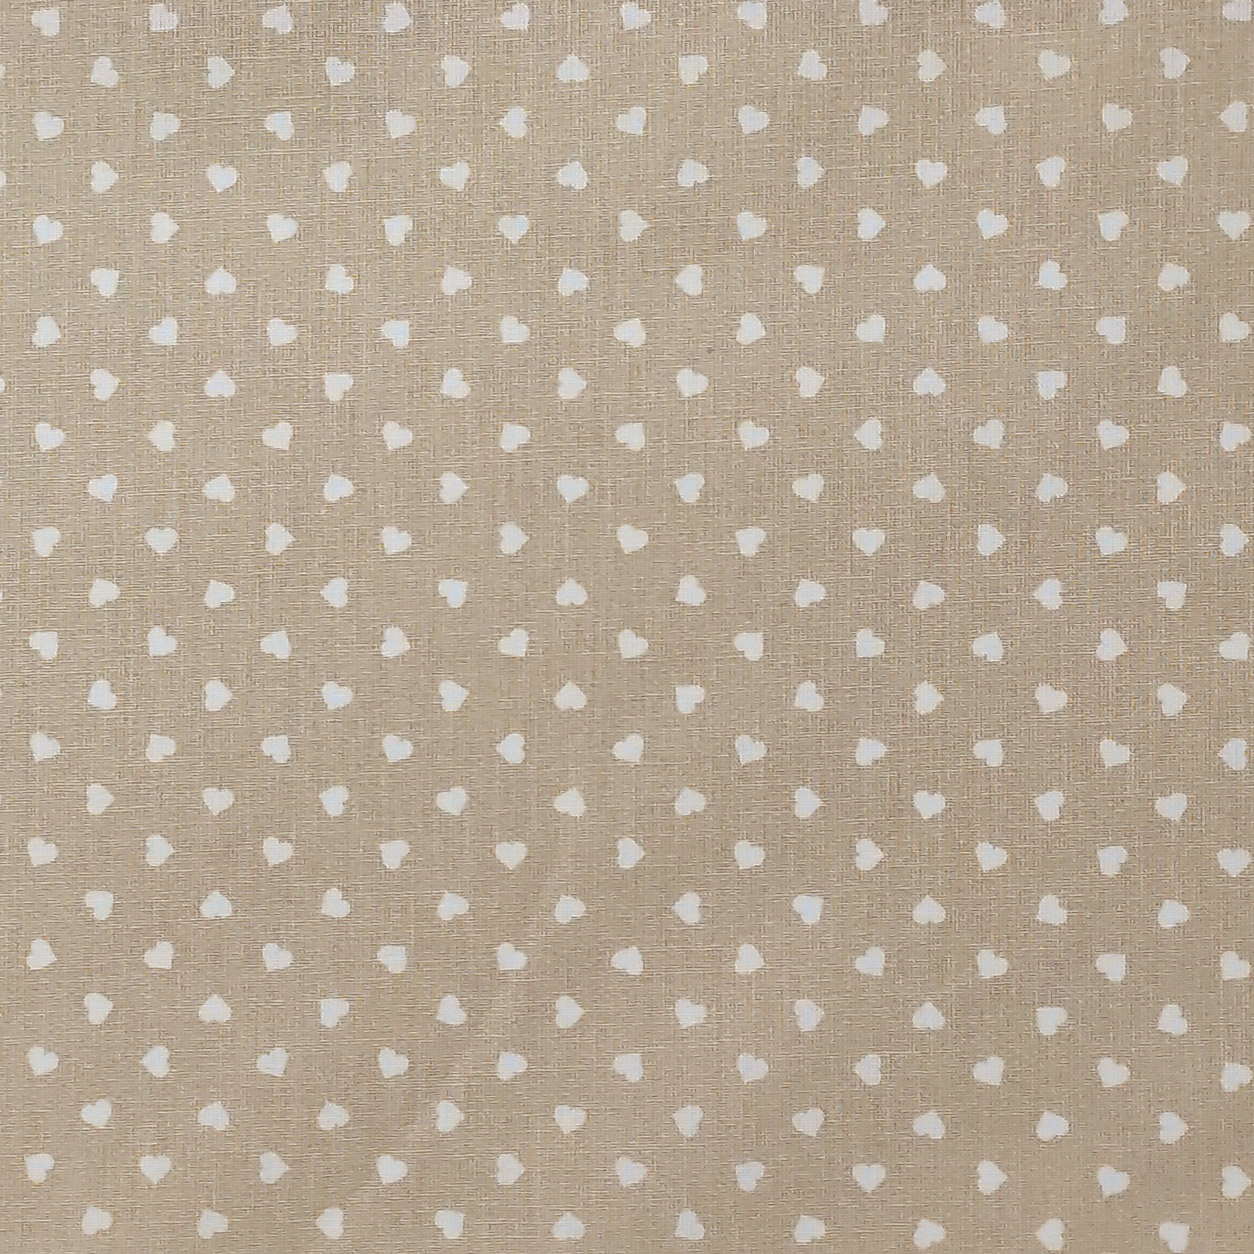 Tessuto cotone percallino cuori bianchi sfondo beige